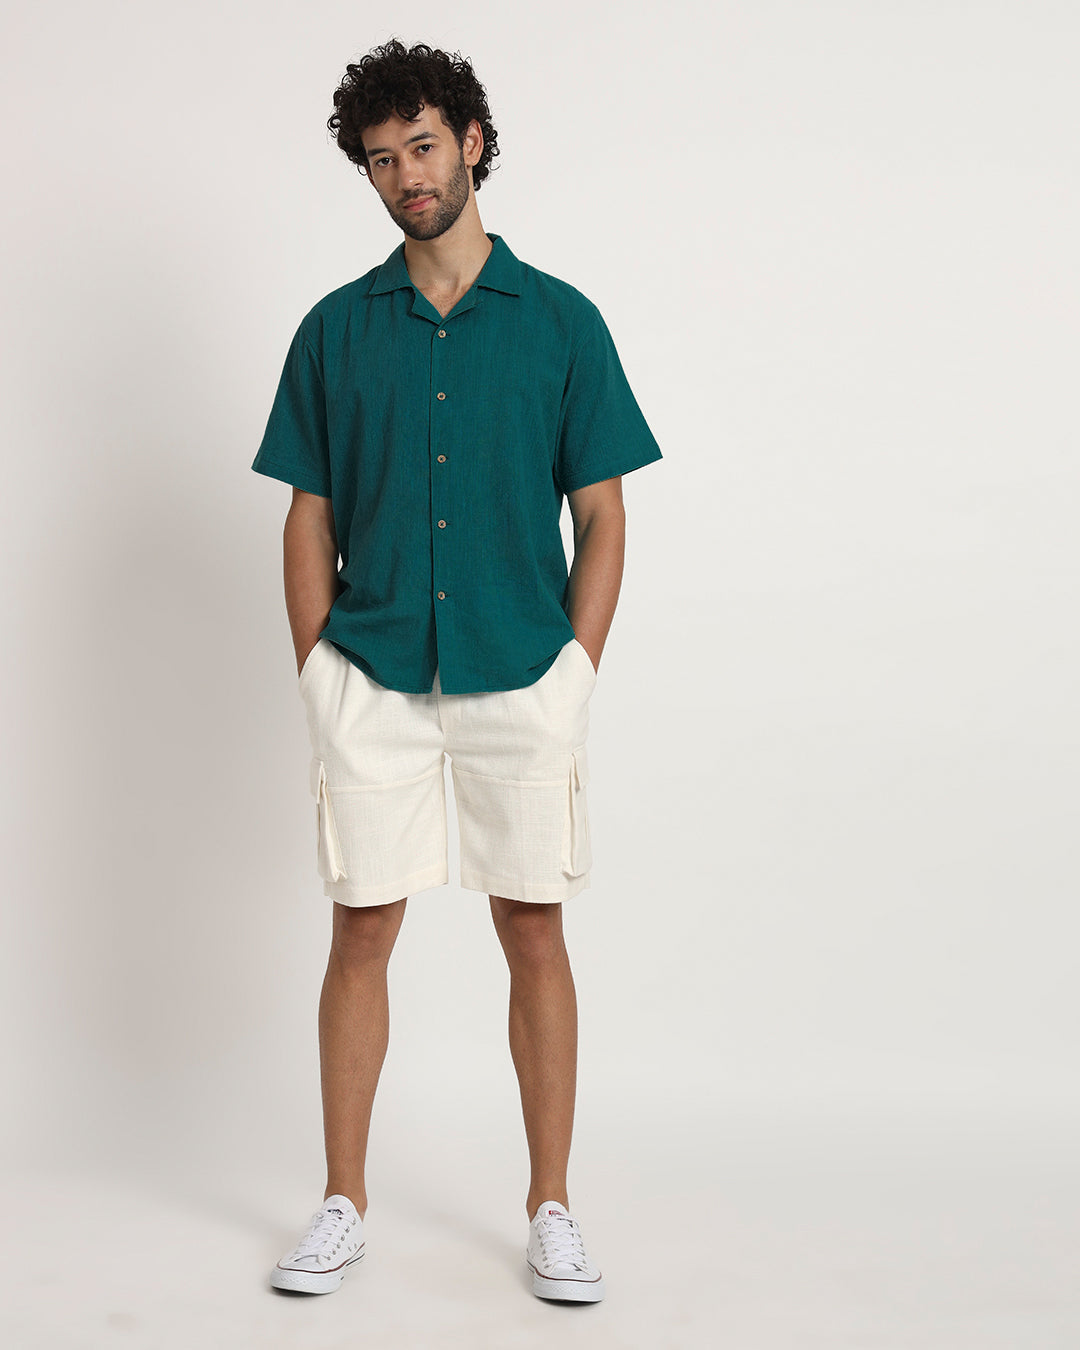 Combo: Classic Deep Teal Half Sleeves Men's Shirt & Cargo Shorts